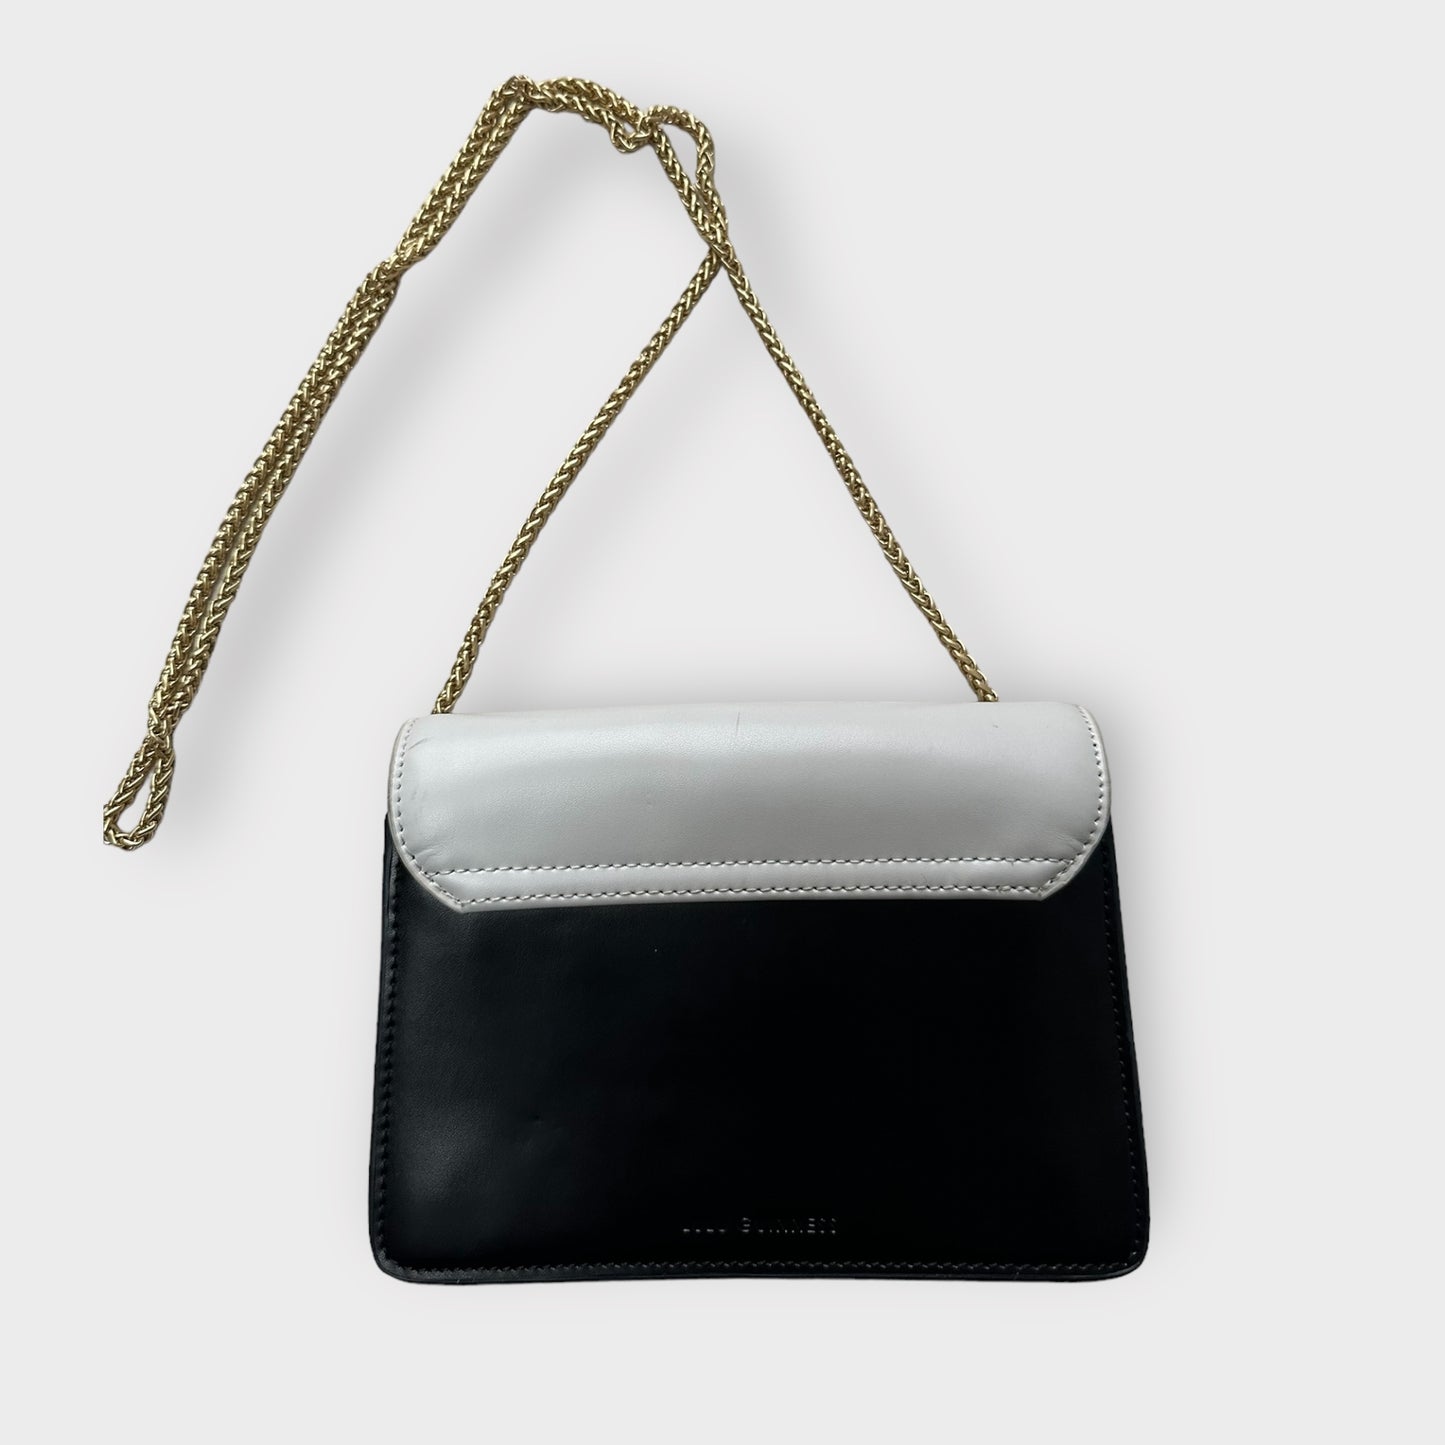 LULU Guinness black white leather gold chain small handbag vgc